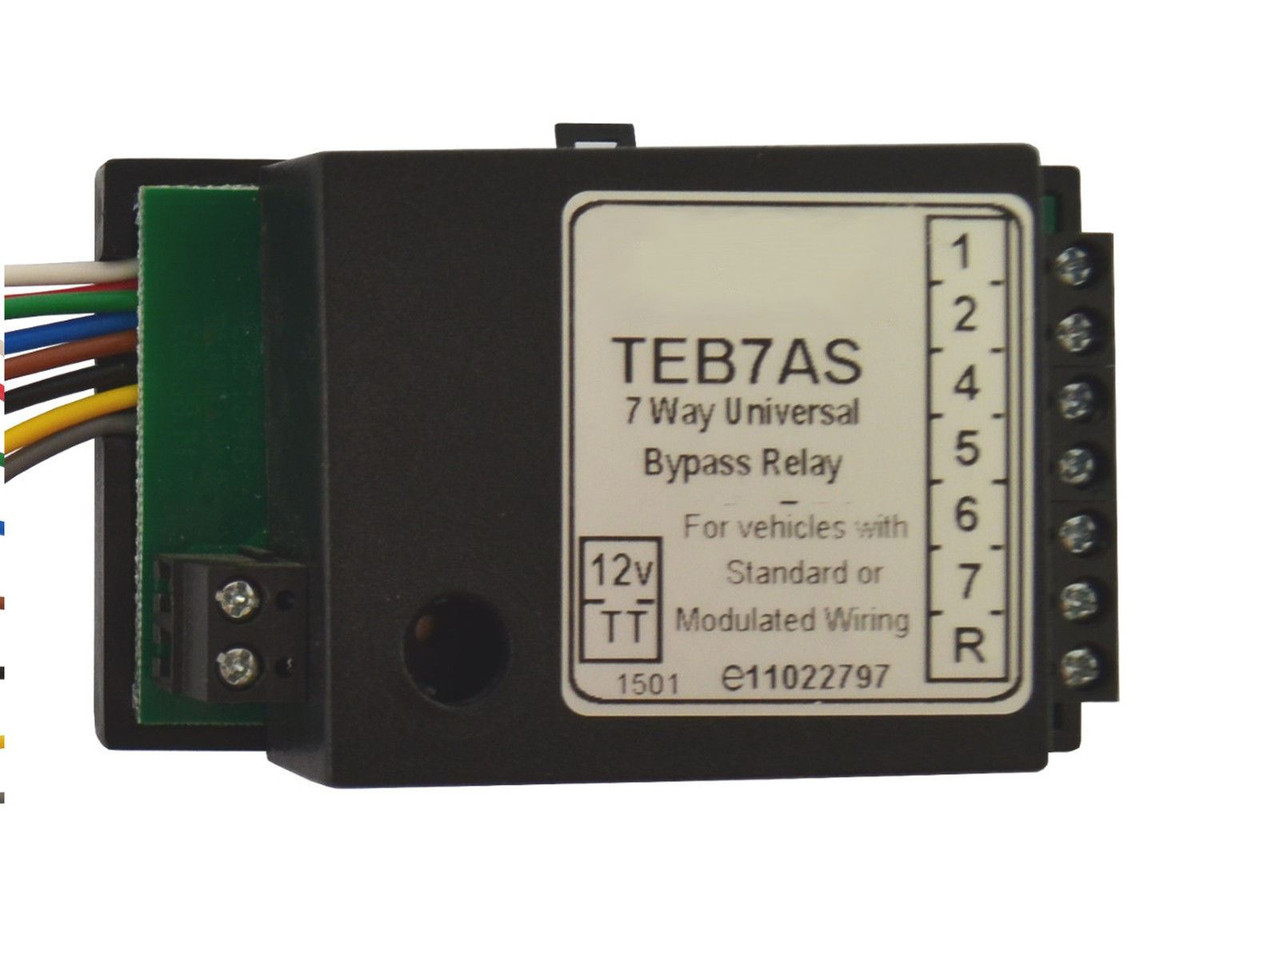 Skoda Towbar Smart 7 Way Bypass Relay Kit For Cambus & Multiplex Wiring 